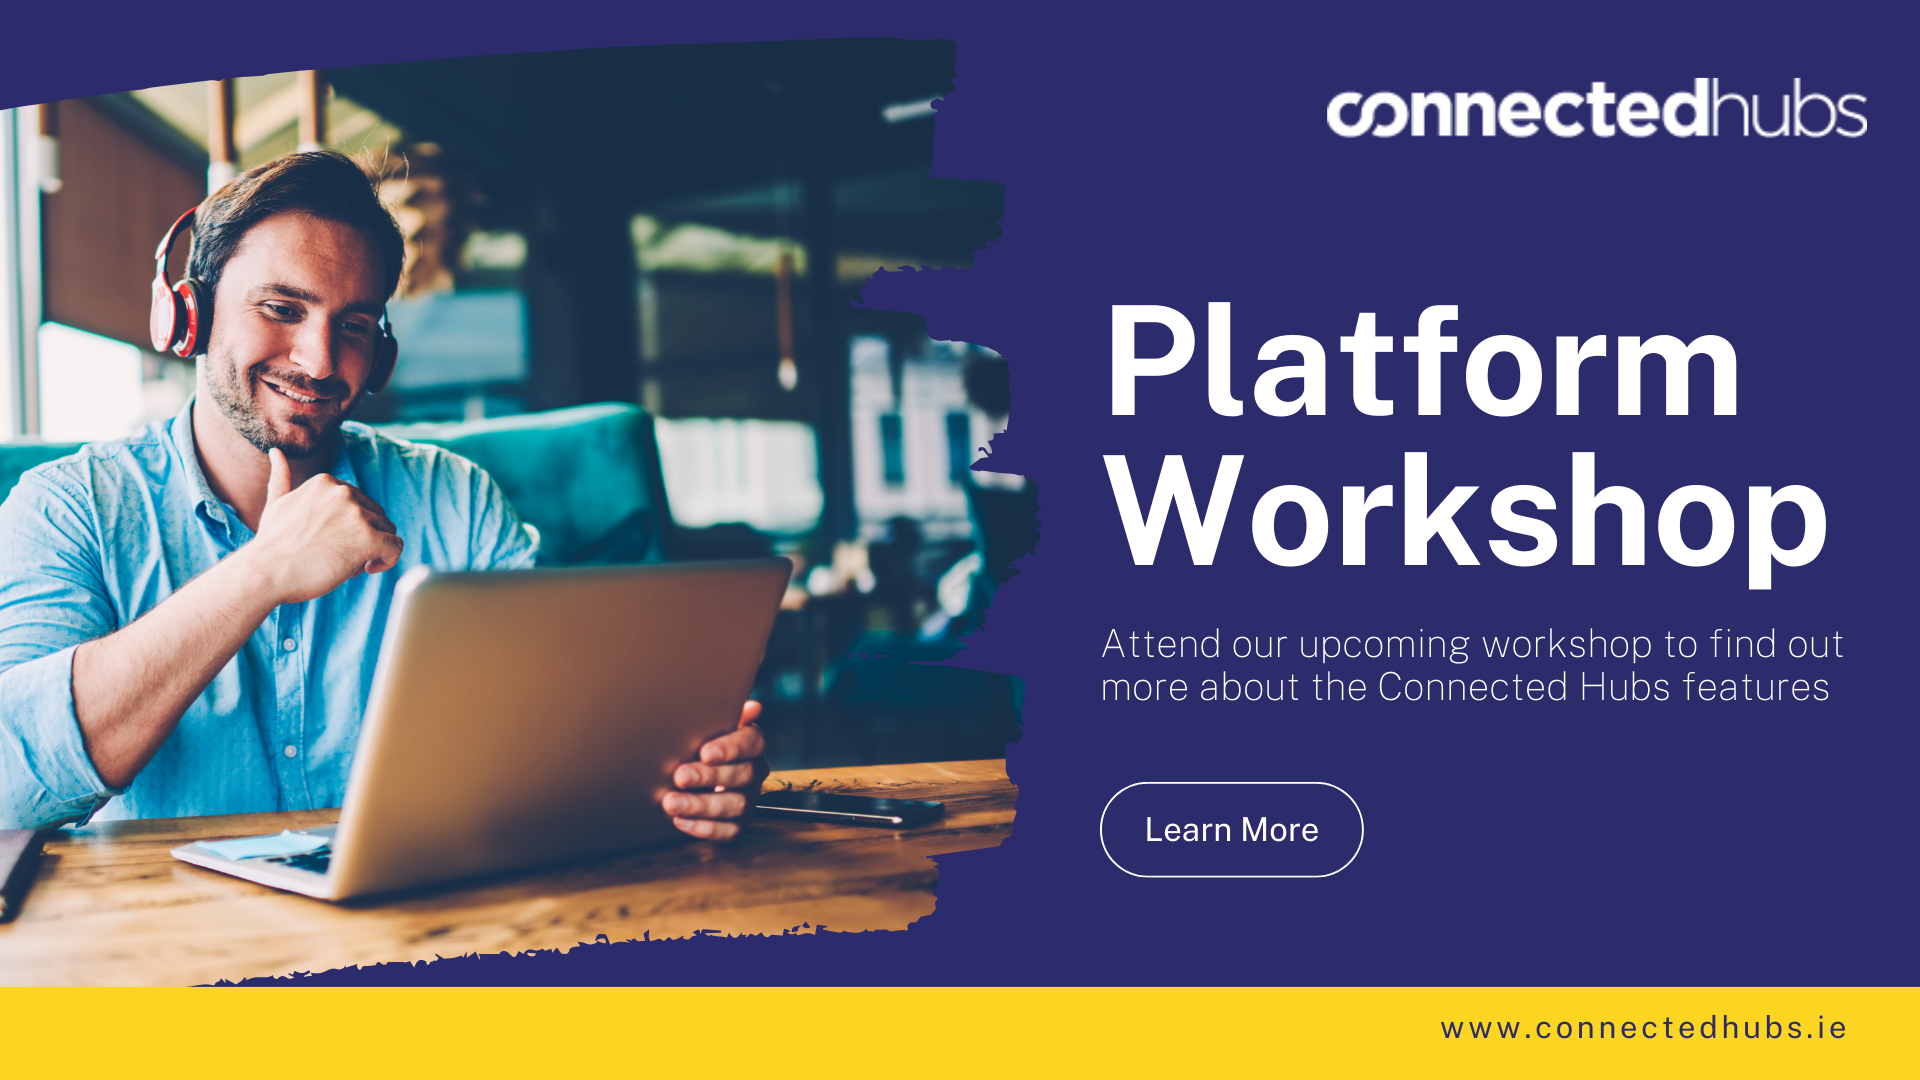 Connected Hubs Platform Workshop for Hub Managers - March